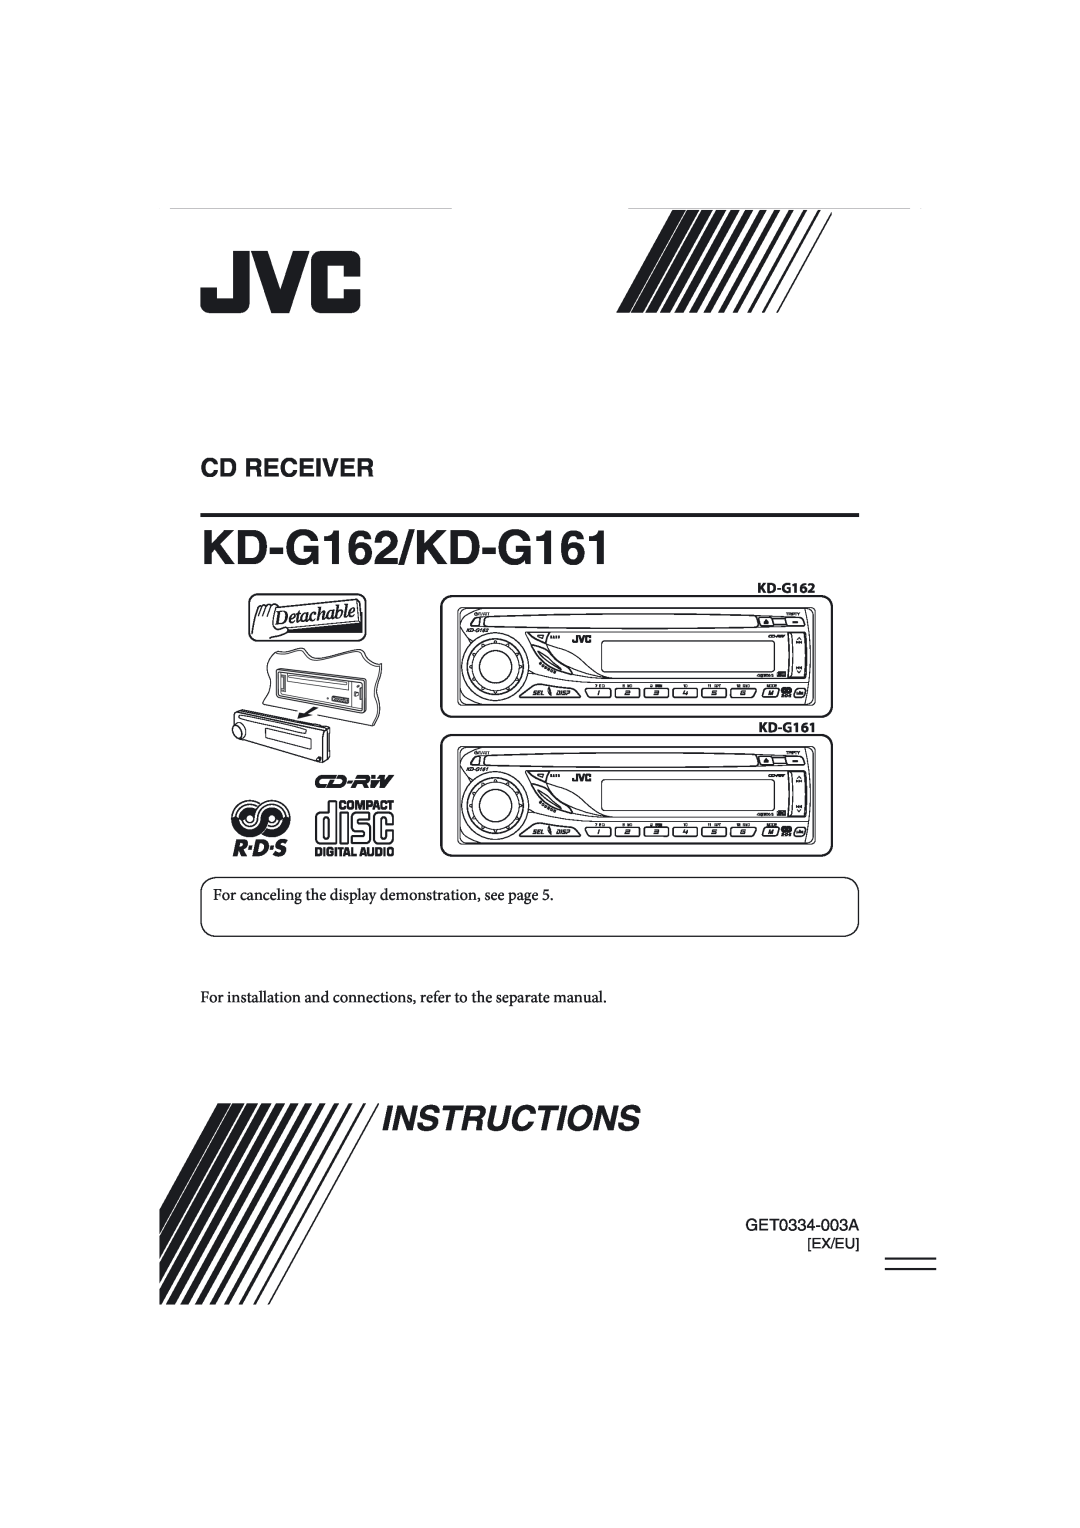 JVC kd-g162 manual GET0334-003A, KD-G162/KD-G161, Instructions, Cd Receiver, Ex/Eu 